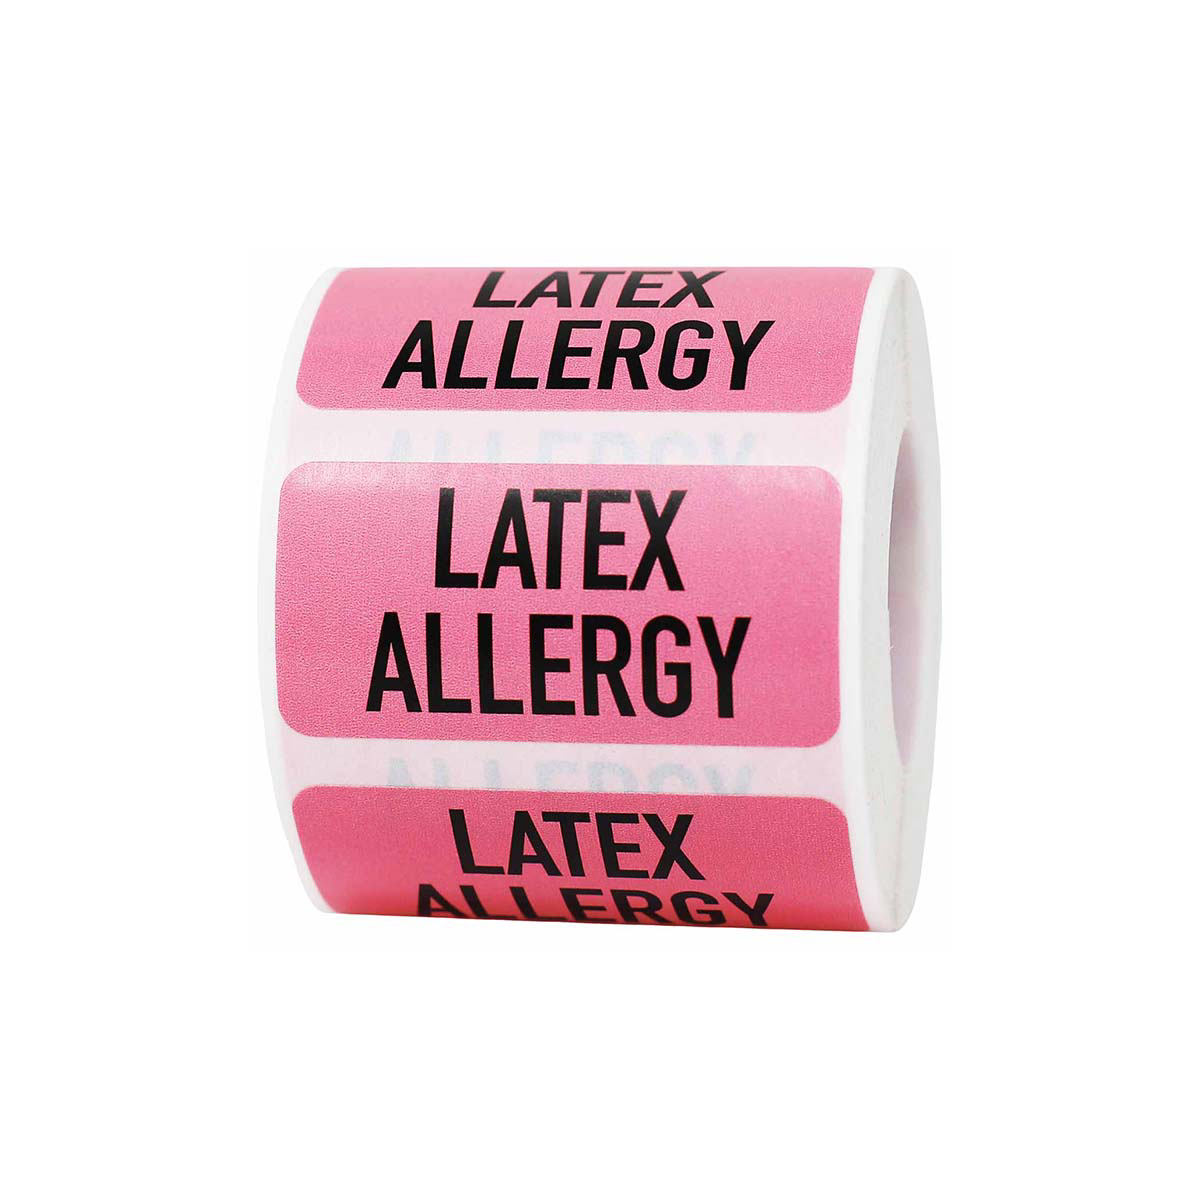 Latex Allergy Alert Label, 8 x 6-1/2